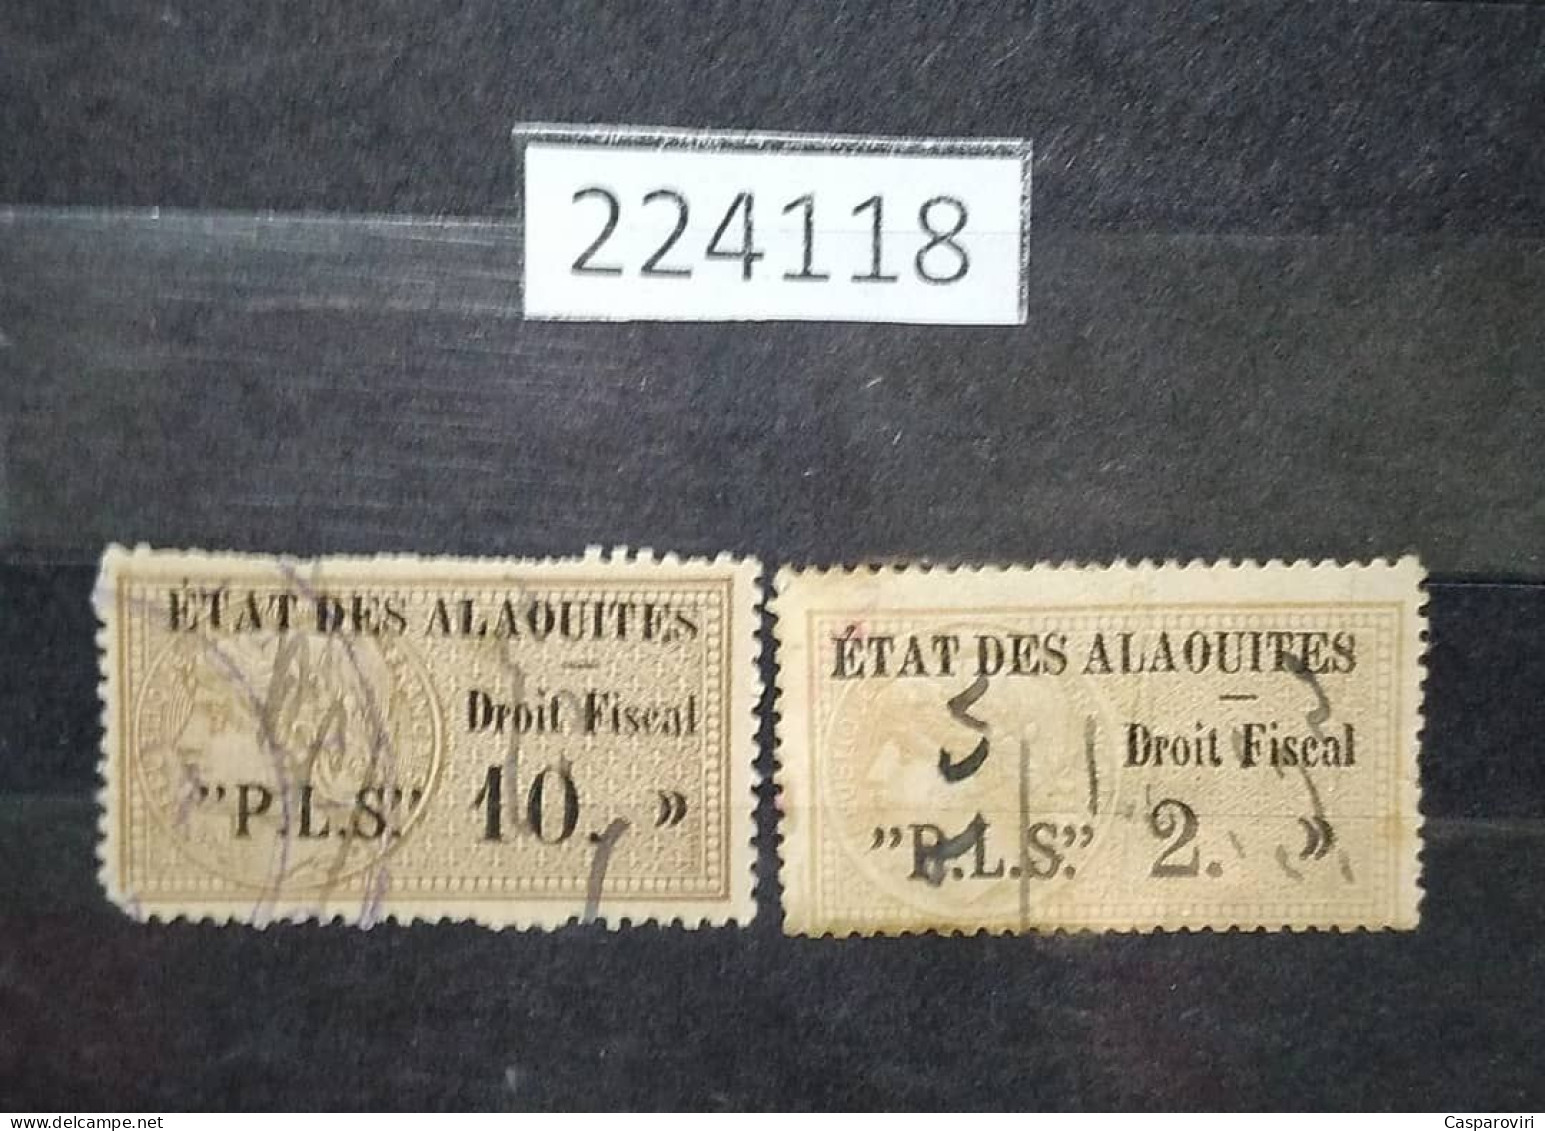 224118; French Colonies; Etat Des Alaouites; 2 Revenue French Stamps 2, 10 P ;Black Overprint Droit Fiscal; USED - Gebraucht